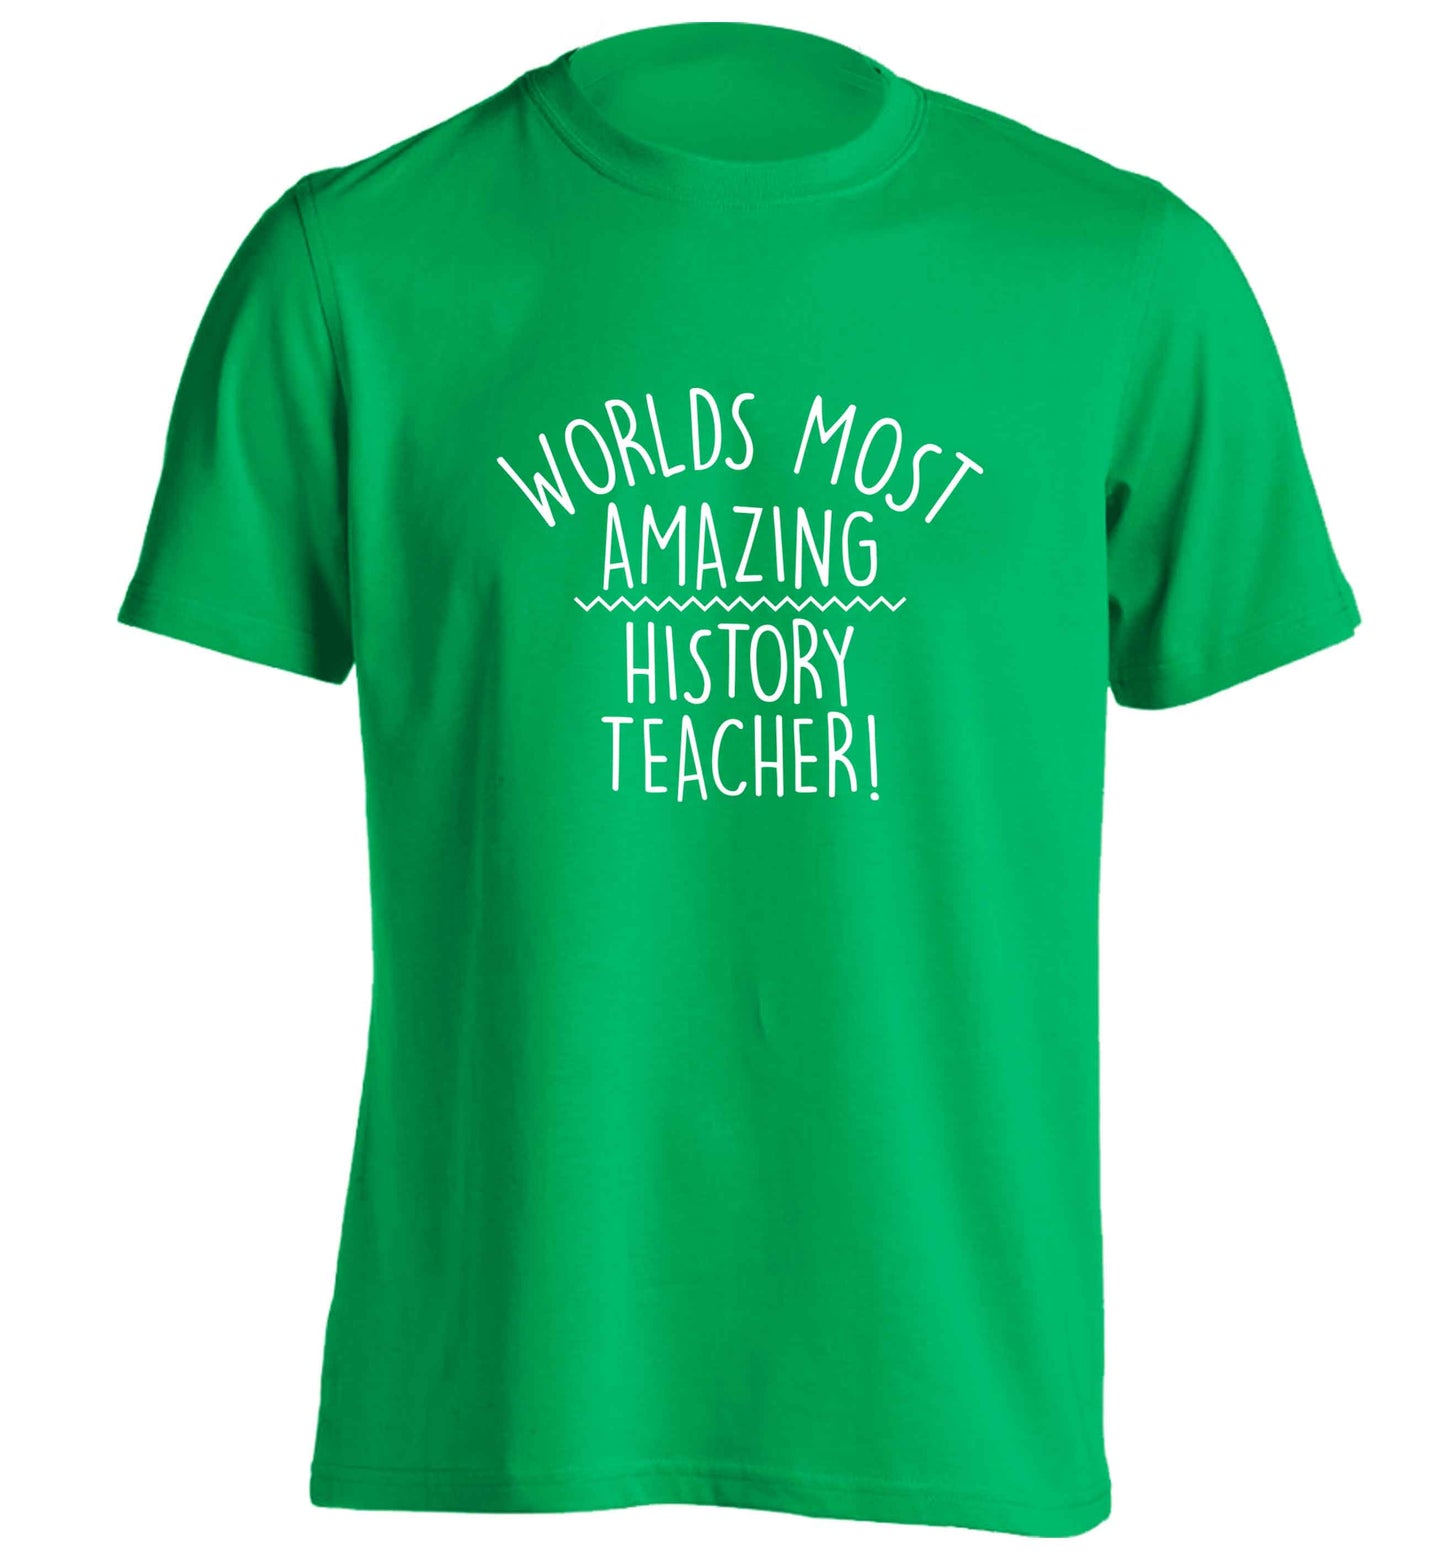 Worlds most amazing History teacher adults unisex green Tshirt 2XL